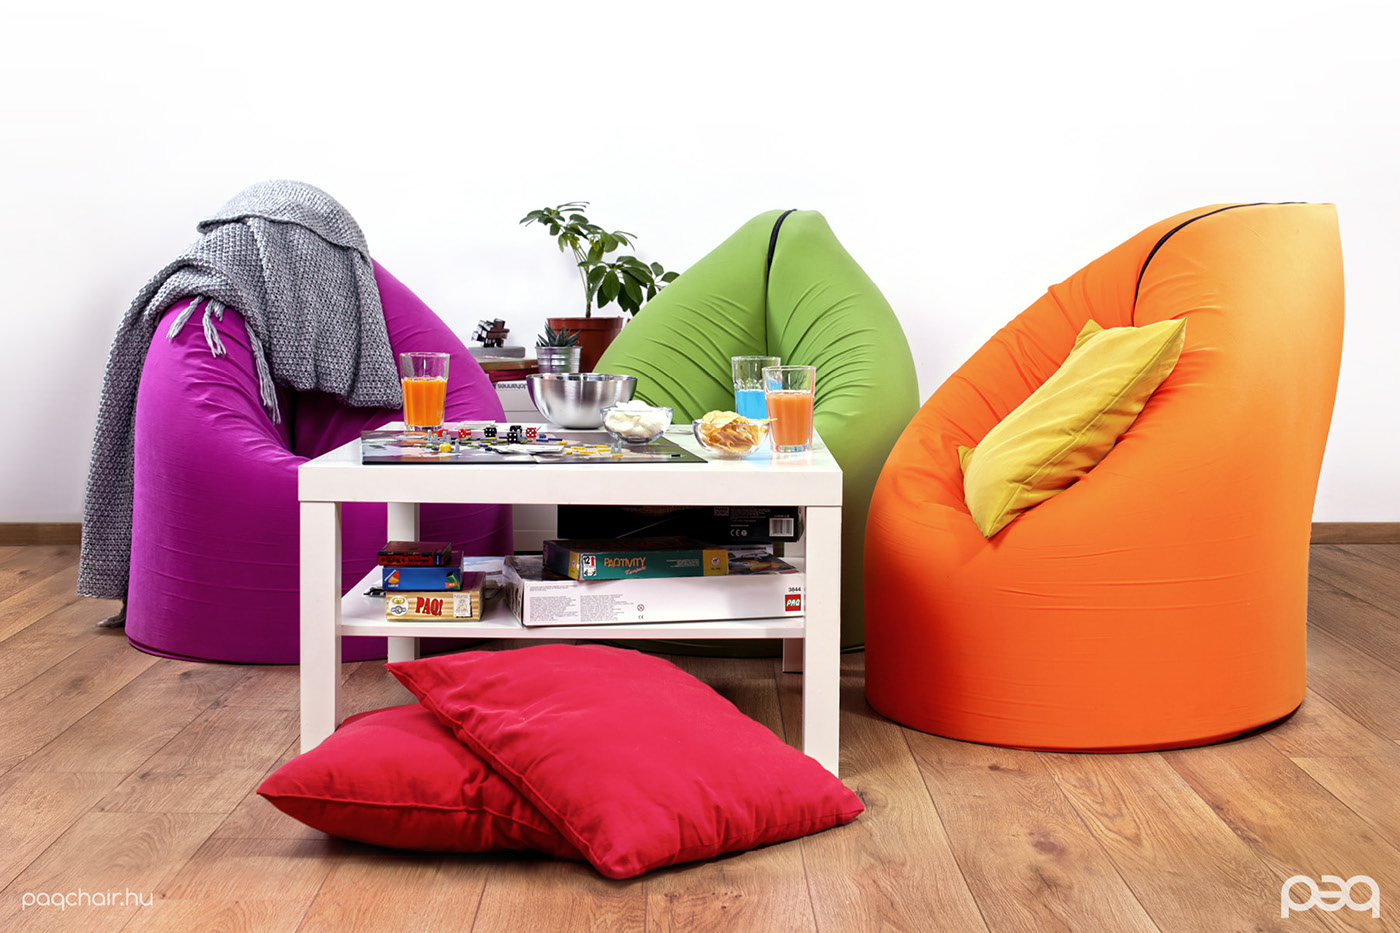 paq chair armchair bed csire geza geza csire transformable multifunctional foam mattress Futon maform